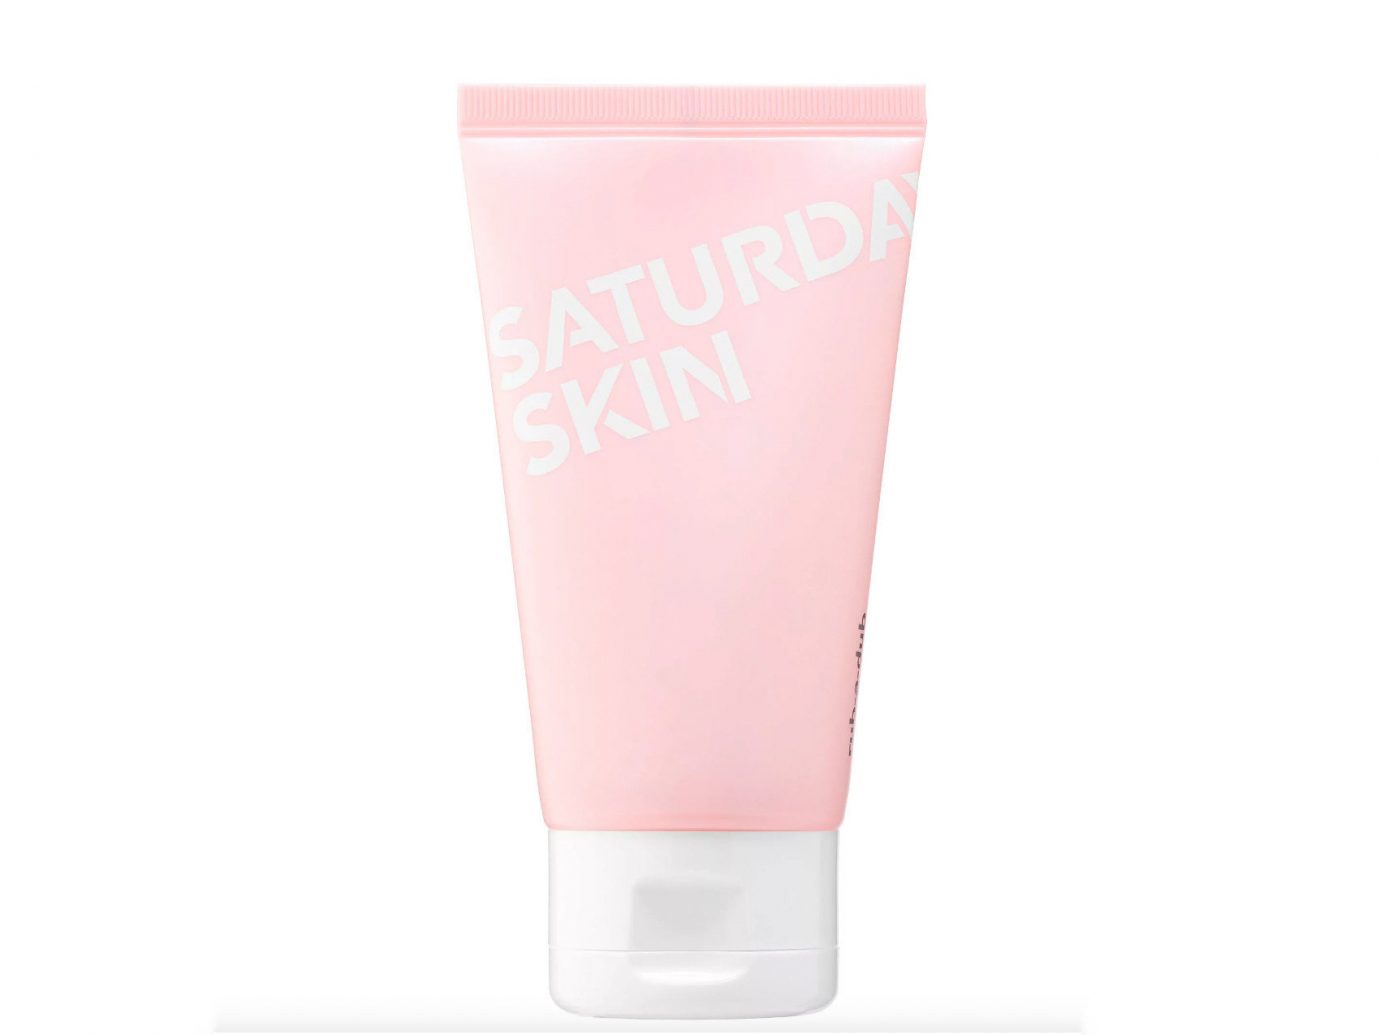 Beauty Health + Wellness Travel Shop toiletry skin cream skin care product lotion cream health & beauty cosmetics peach